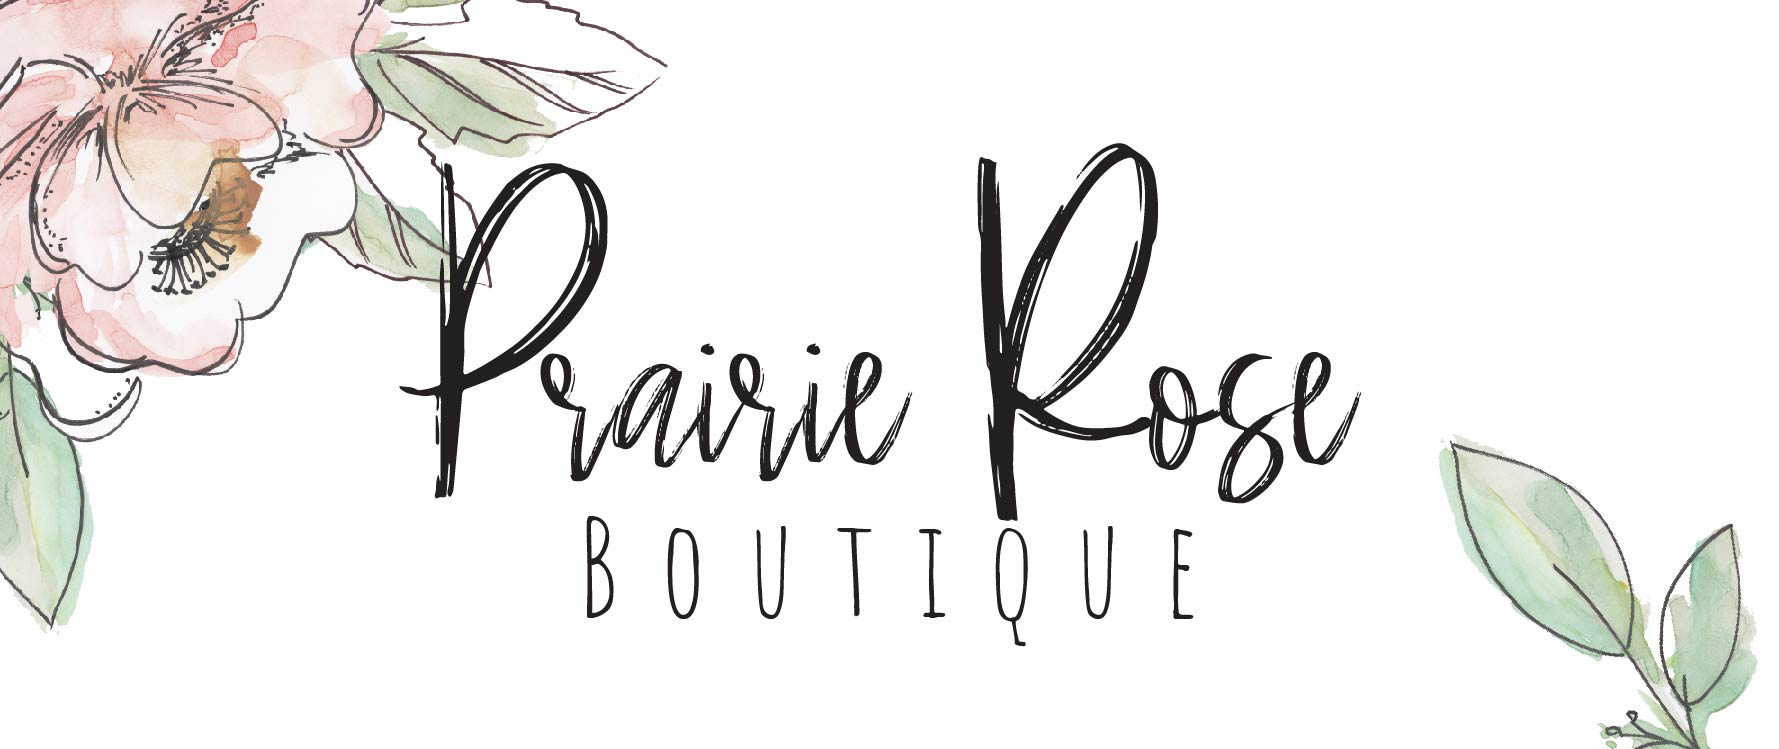 Prairie Rose Boutique